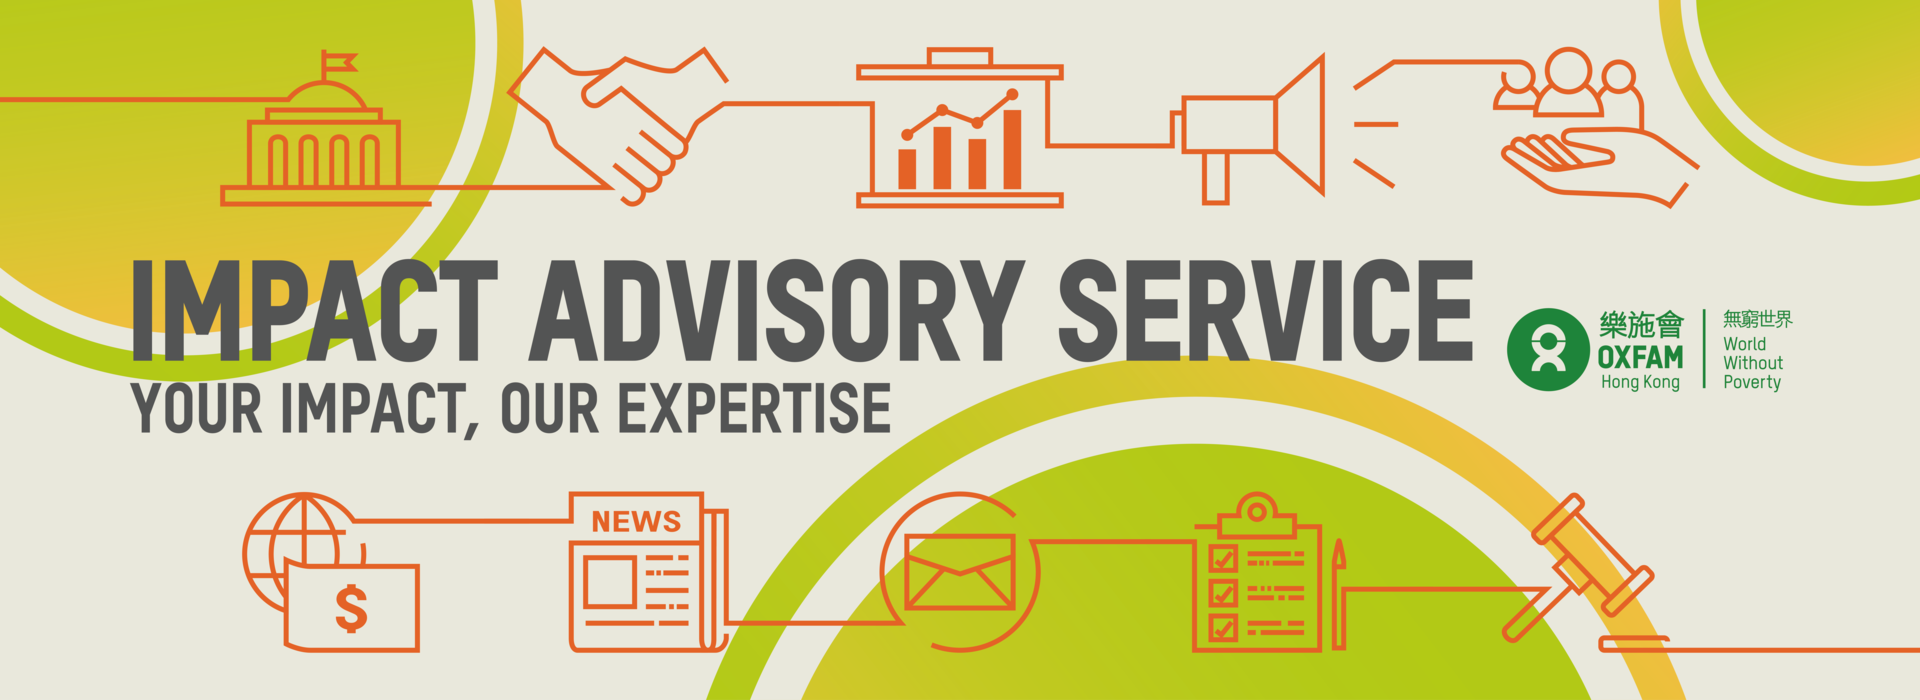 Impact Advisory Services